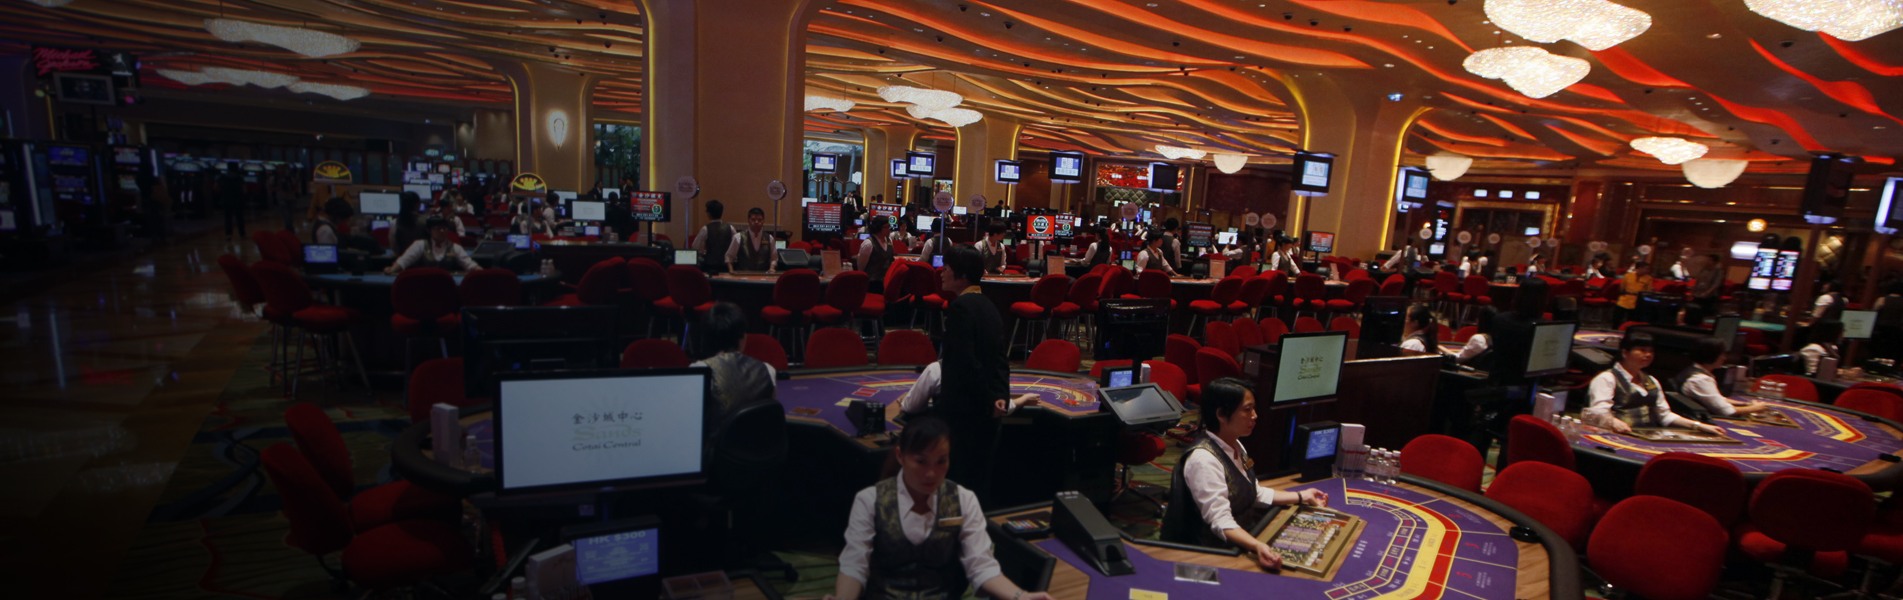 Sands Macao Casino 2